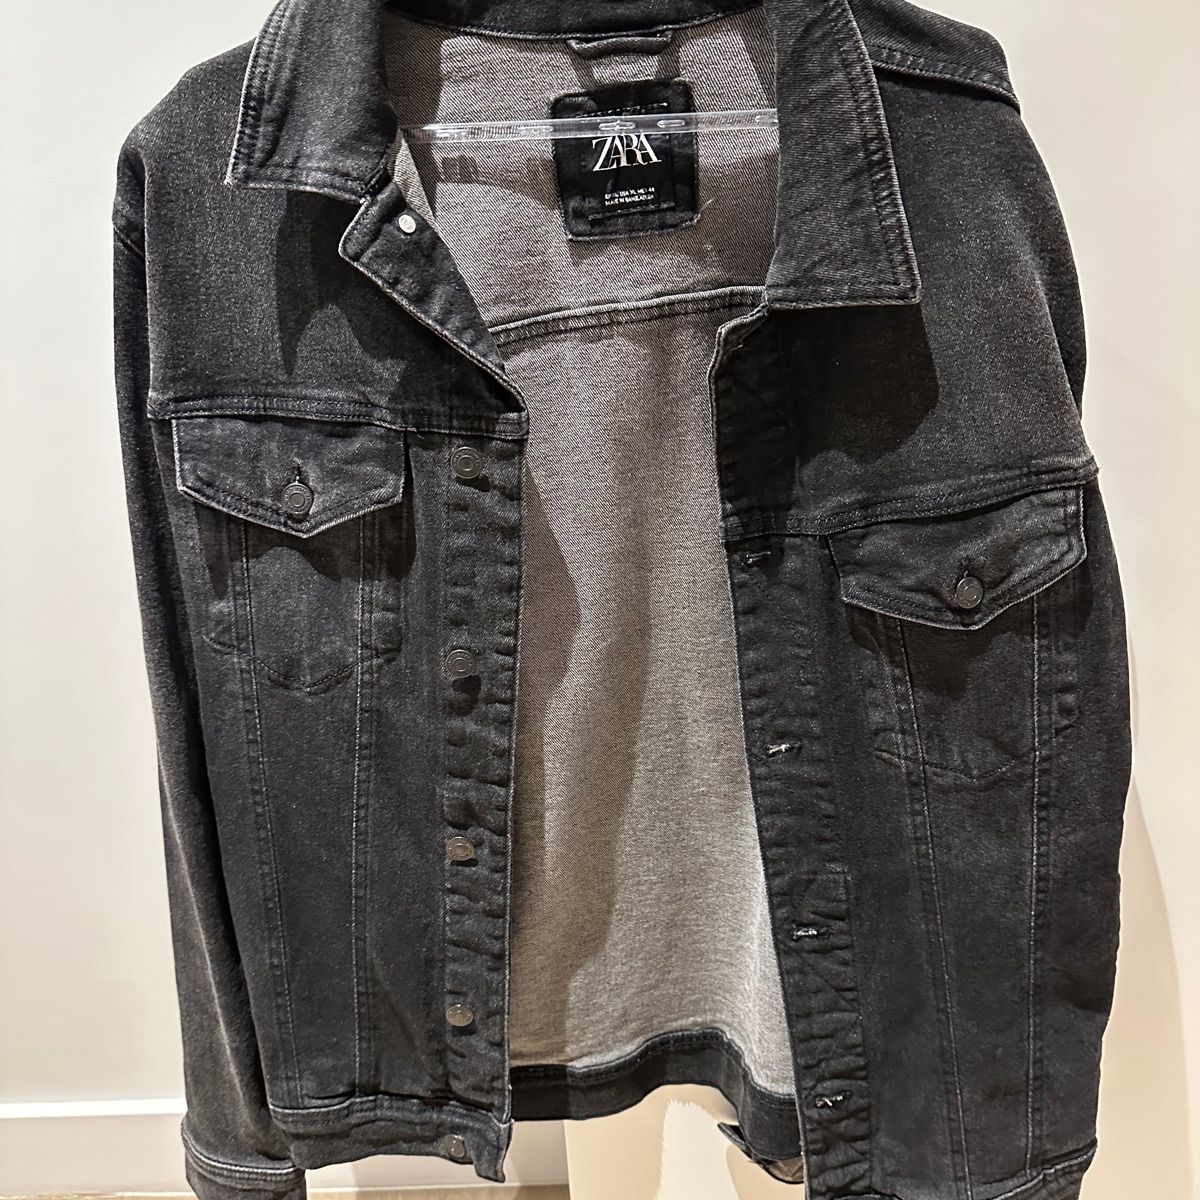 Jaqueta Zara Woman Overshirt Black Jeans, Tamanho Xs=Pp, Semi-Nova,  Pouquíssimo Usada, Linda!, Casaco Feminino Zara Nunca Usado 96724932